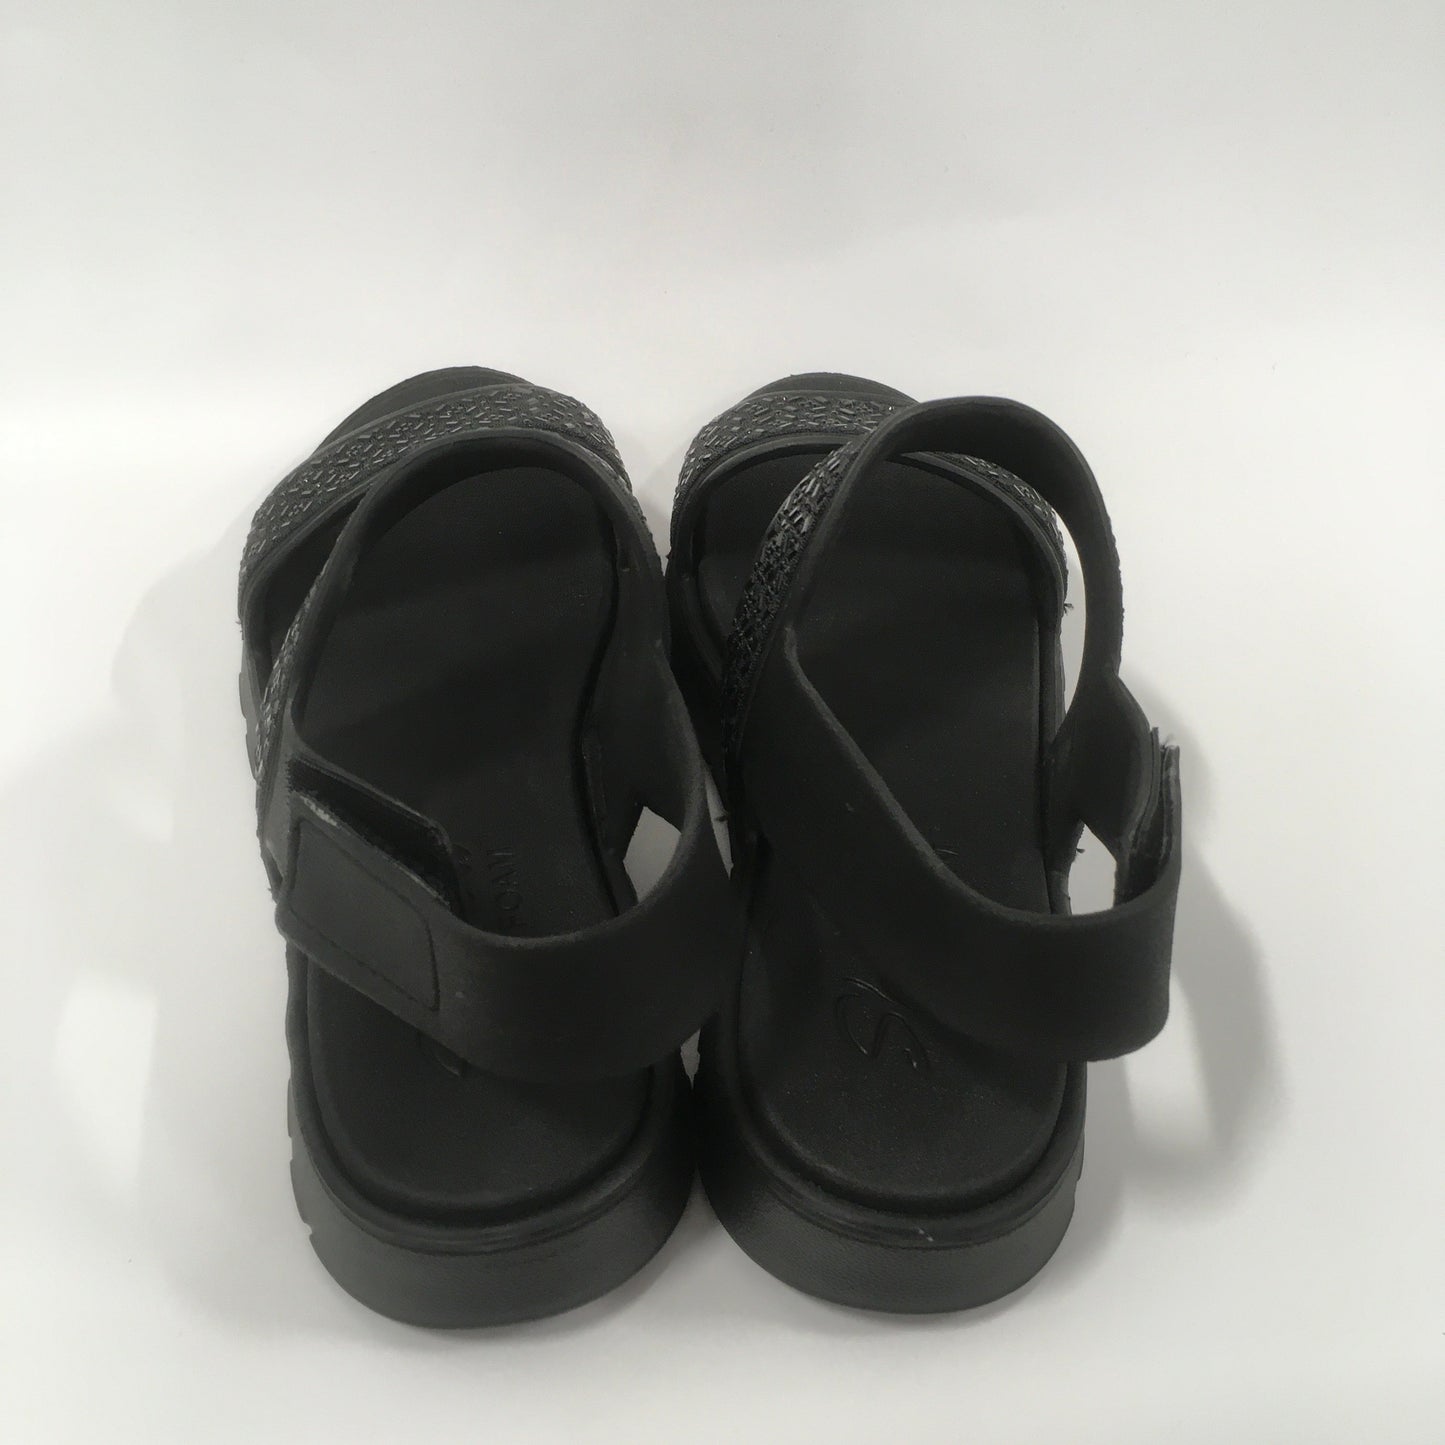 Black Sandals Flats Skechers, Size 9